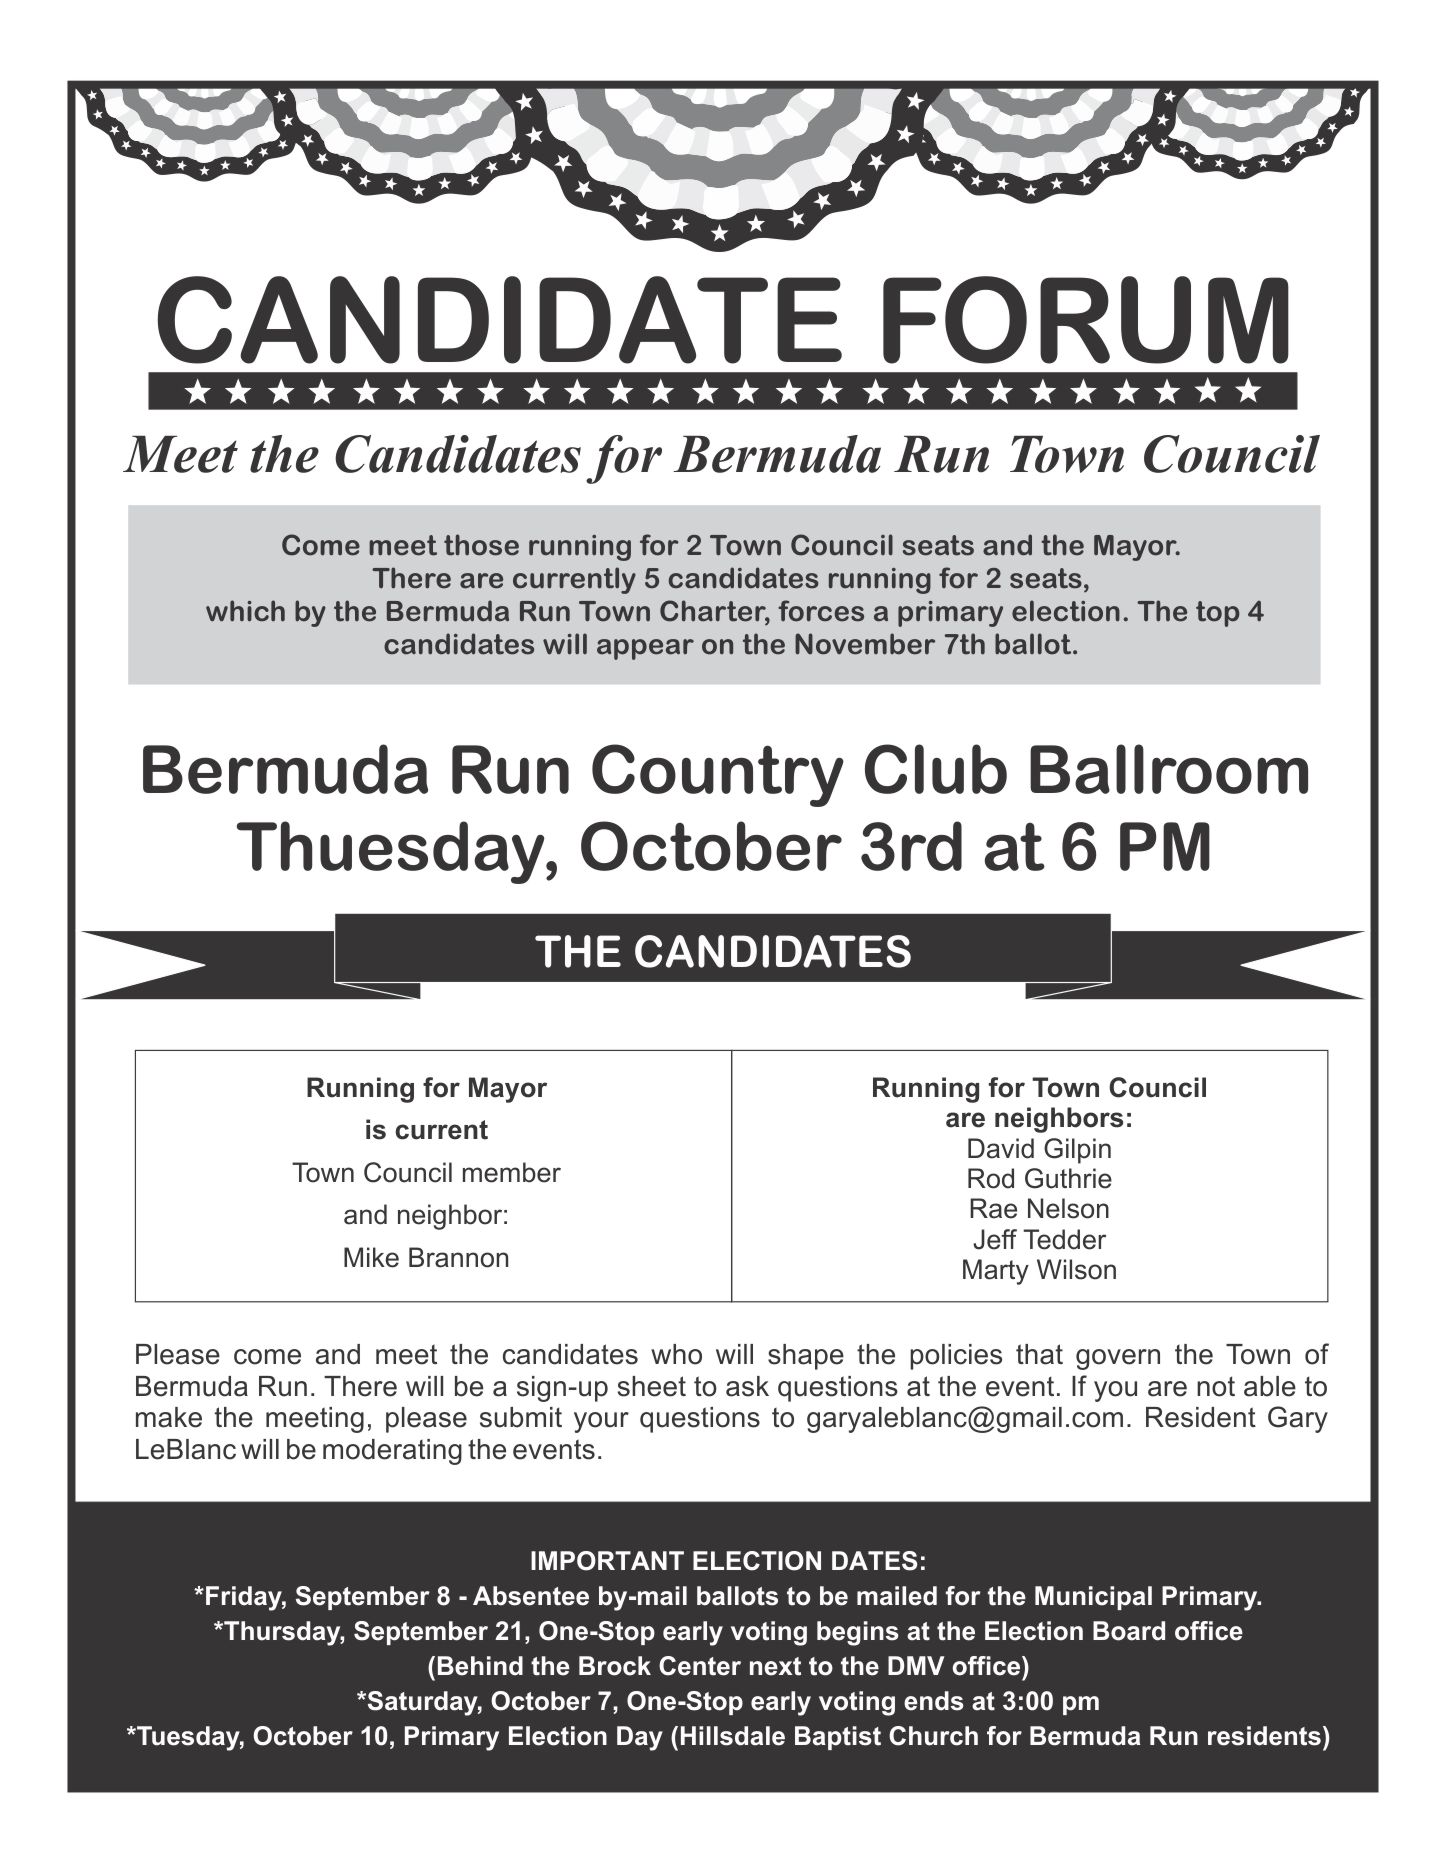 Candidate Forum BRCC